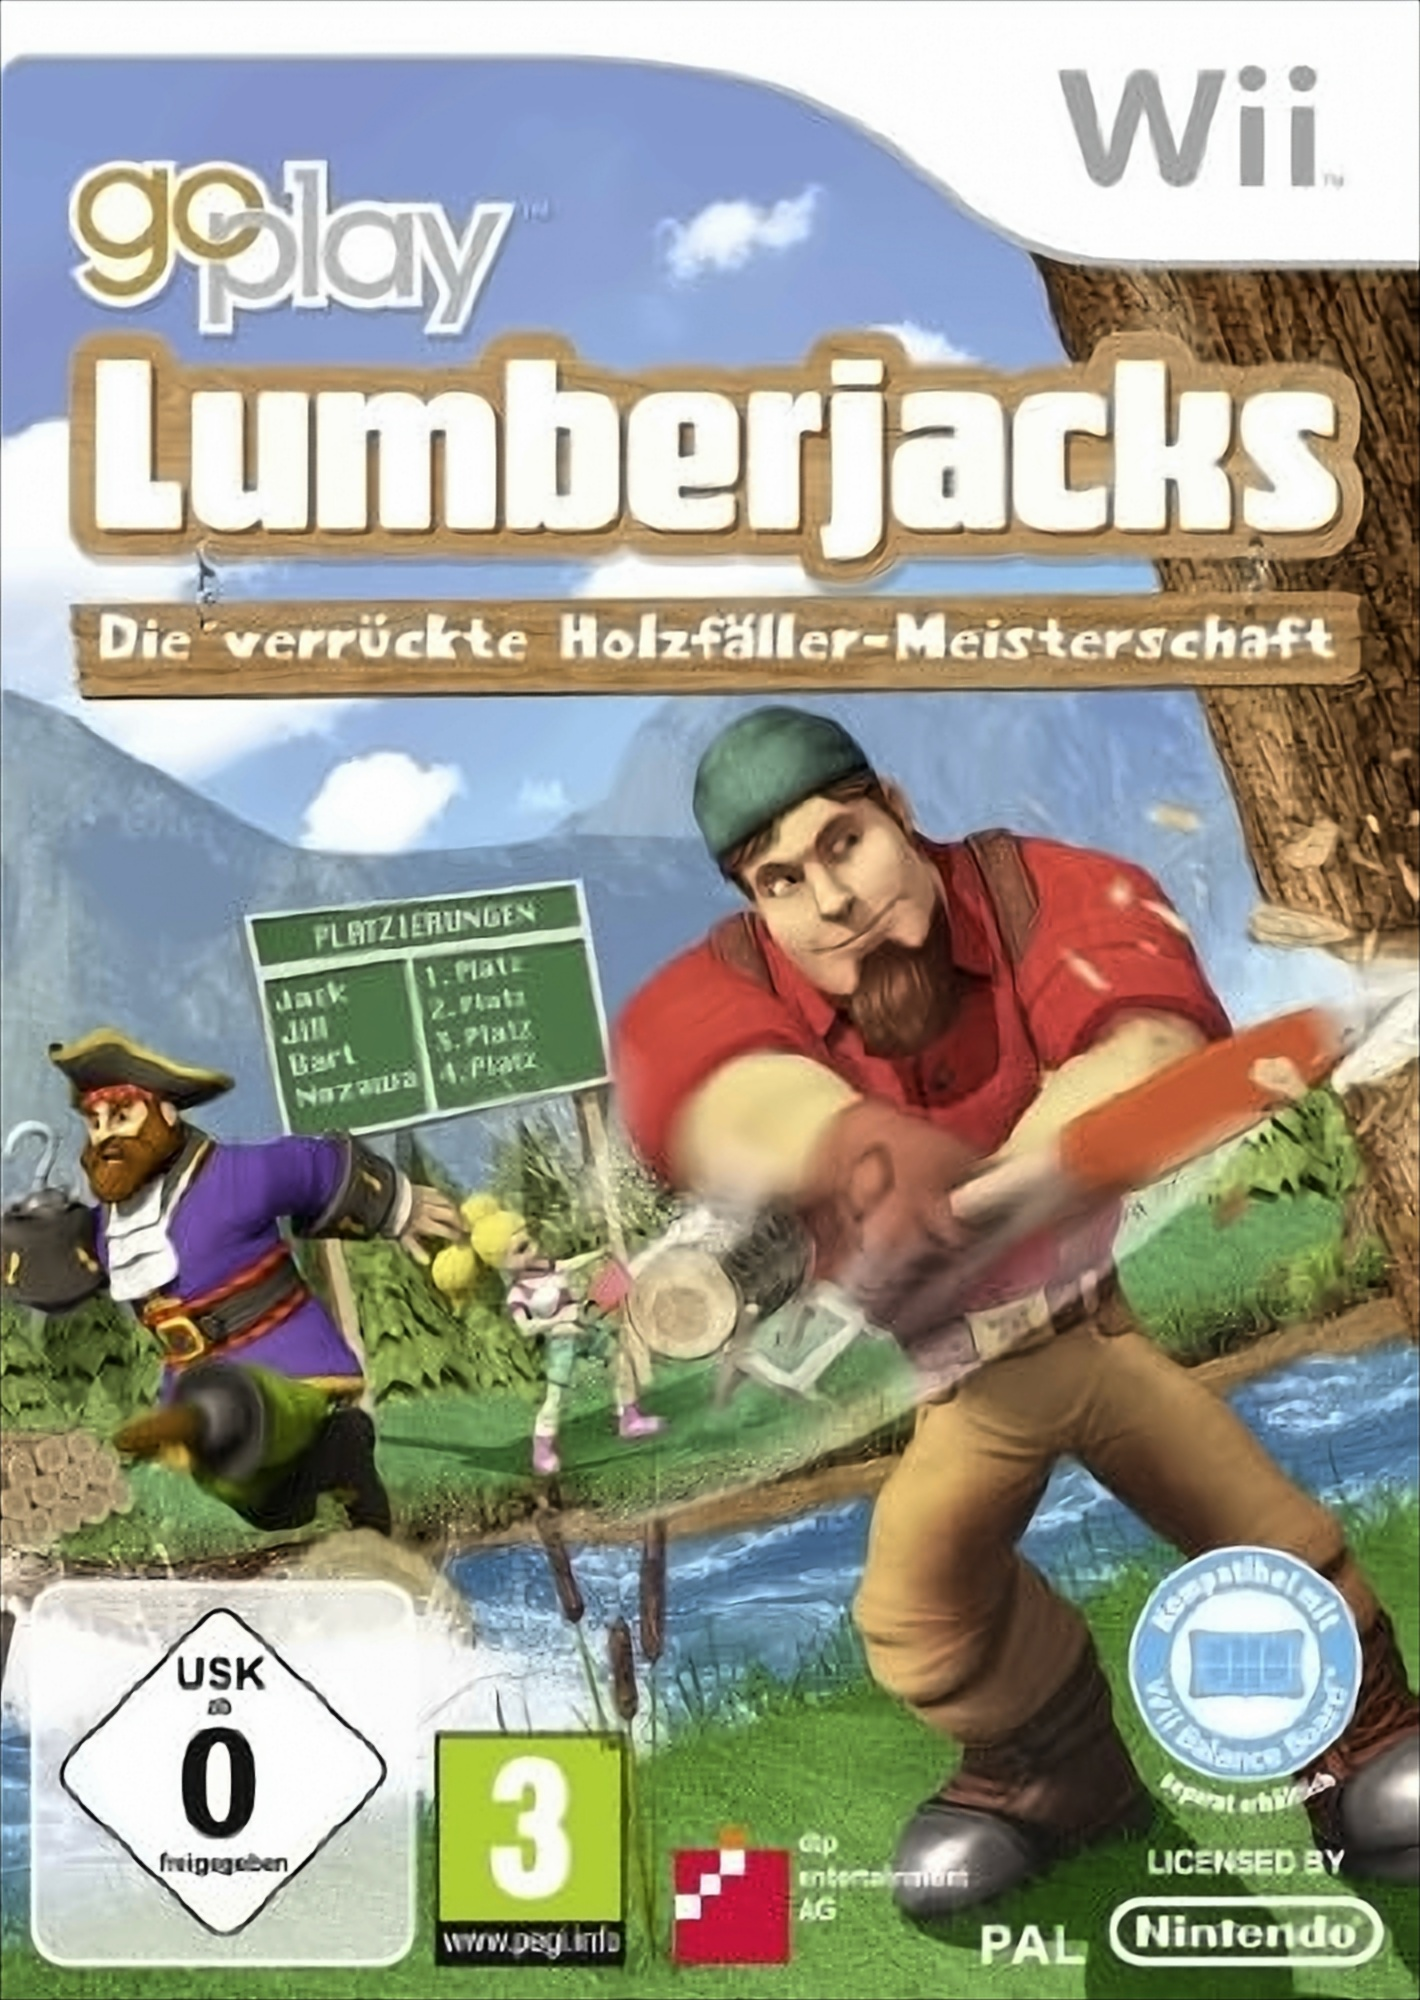 Wii] Lumberjacks - [Nintendo